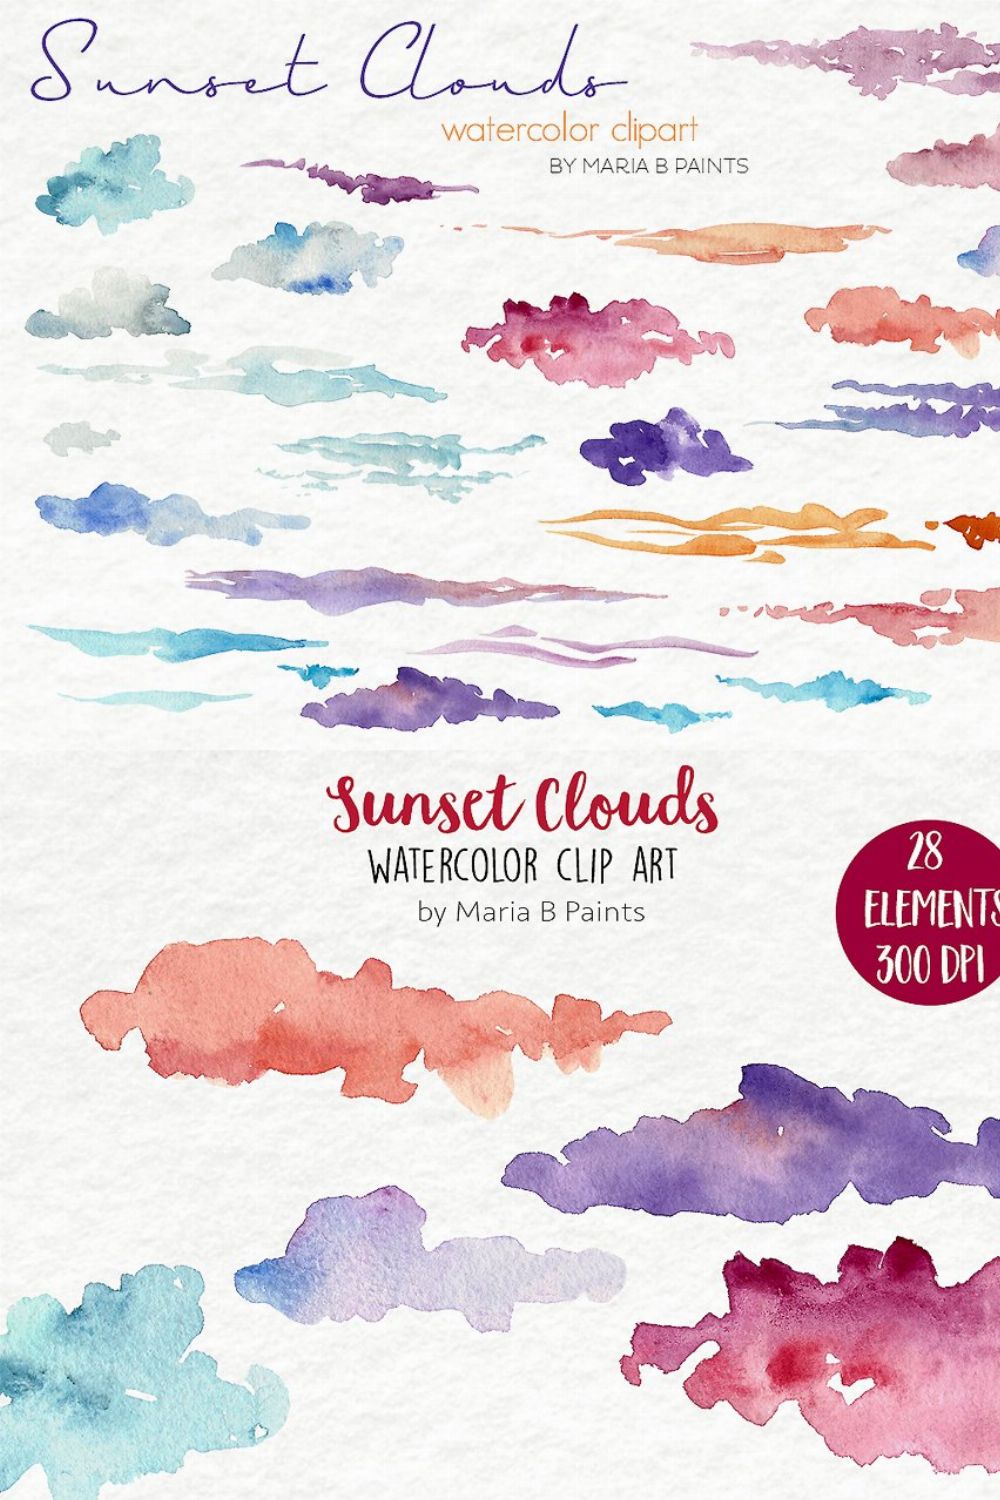 Watercolor Clip Art - Sunset Clouds pinterest preview image.